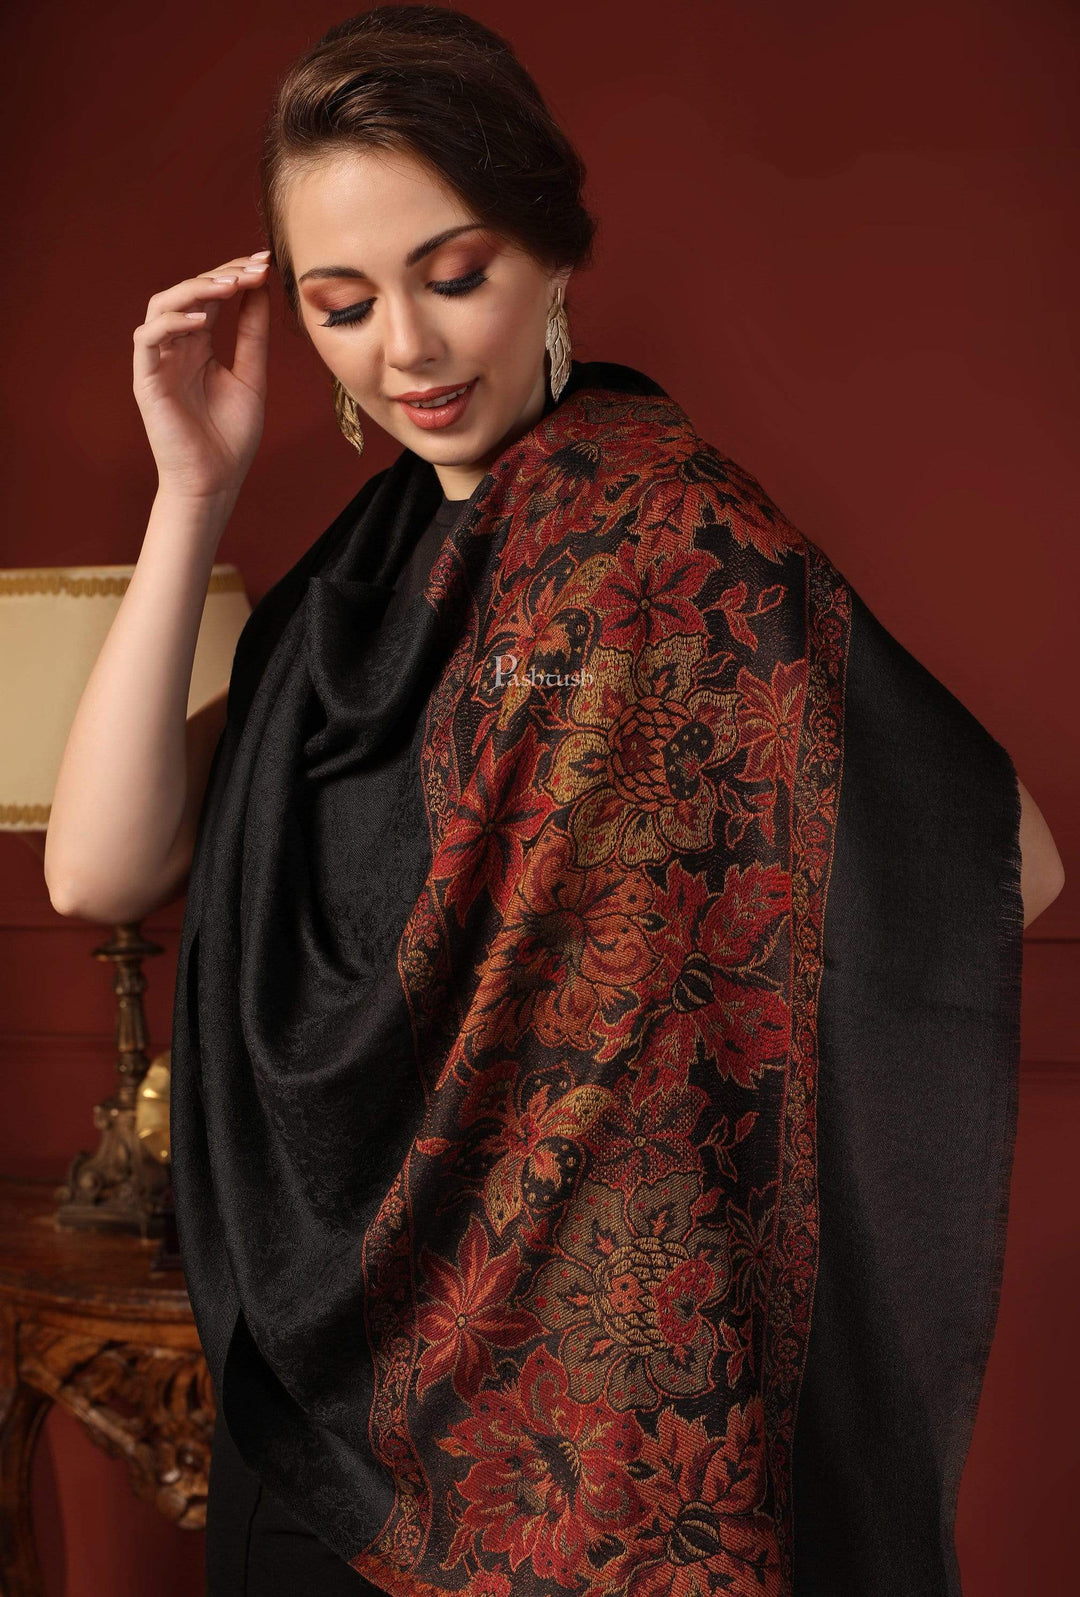 Pashtush India 70x200 Pashtush Women's Silk-Wool Reversible Floral Scarf, Soft and Warm Black